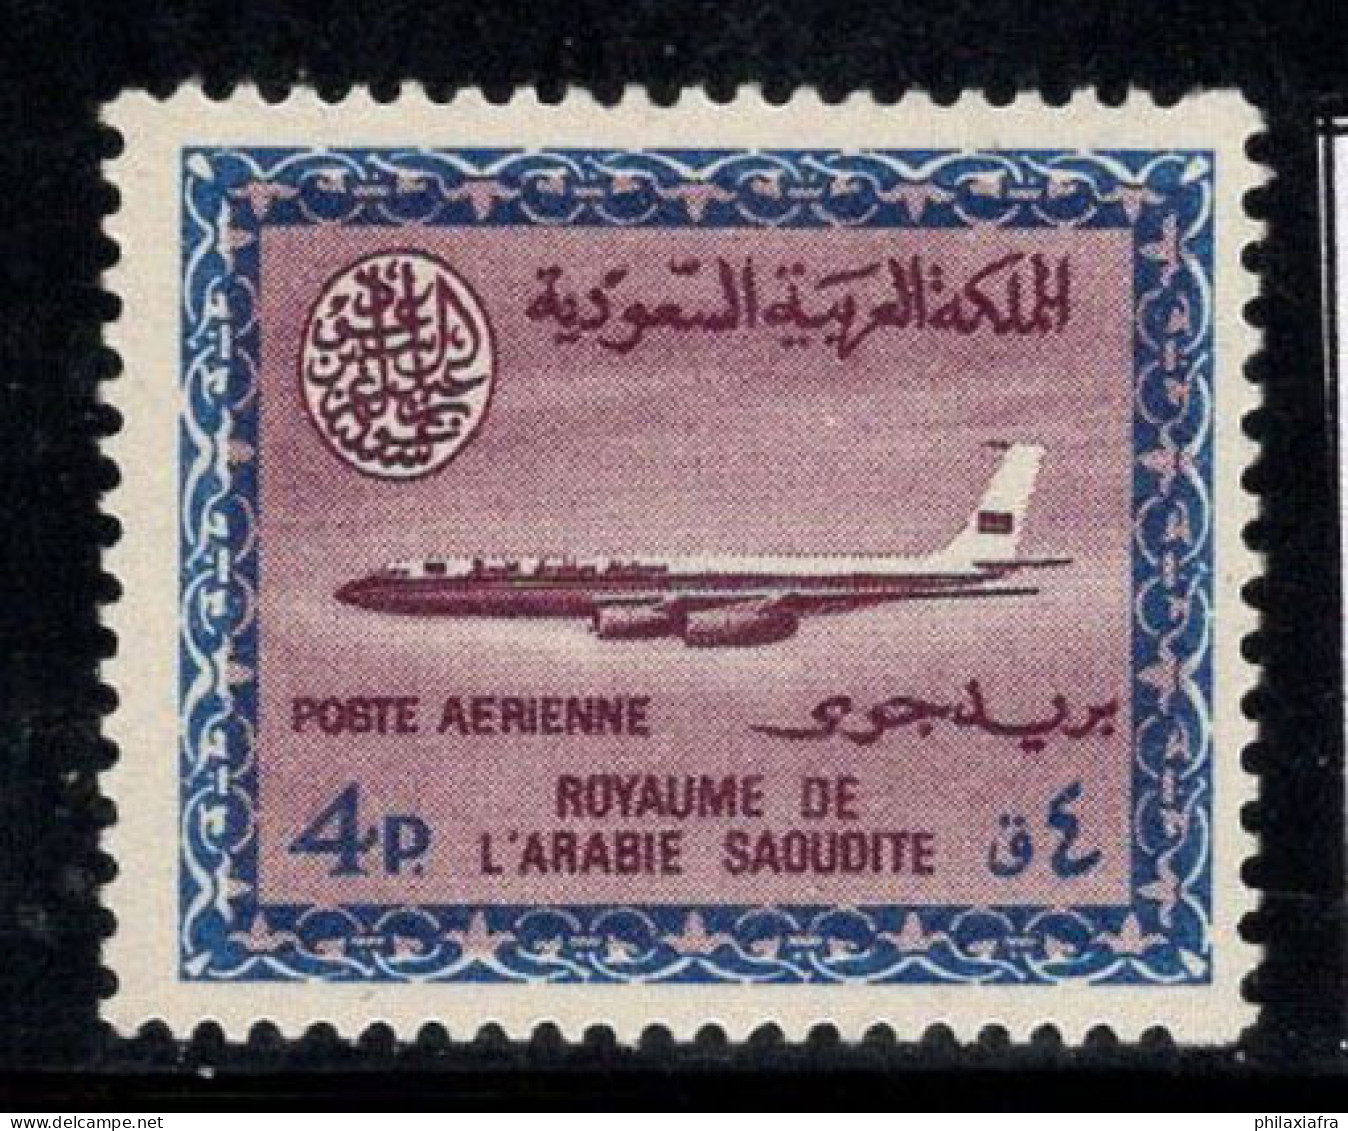 Arabie Saoudite 1965-72 Mi. 245 Neuf ** 100% Poste Aérienne 4 Pia, Boeing 720 B - Saoedi-Arabië